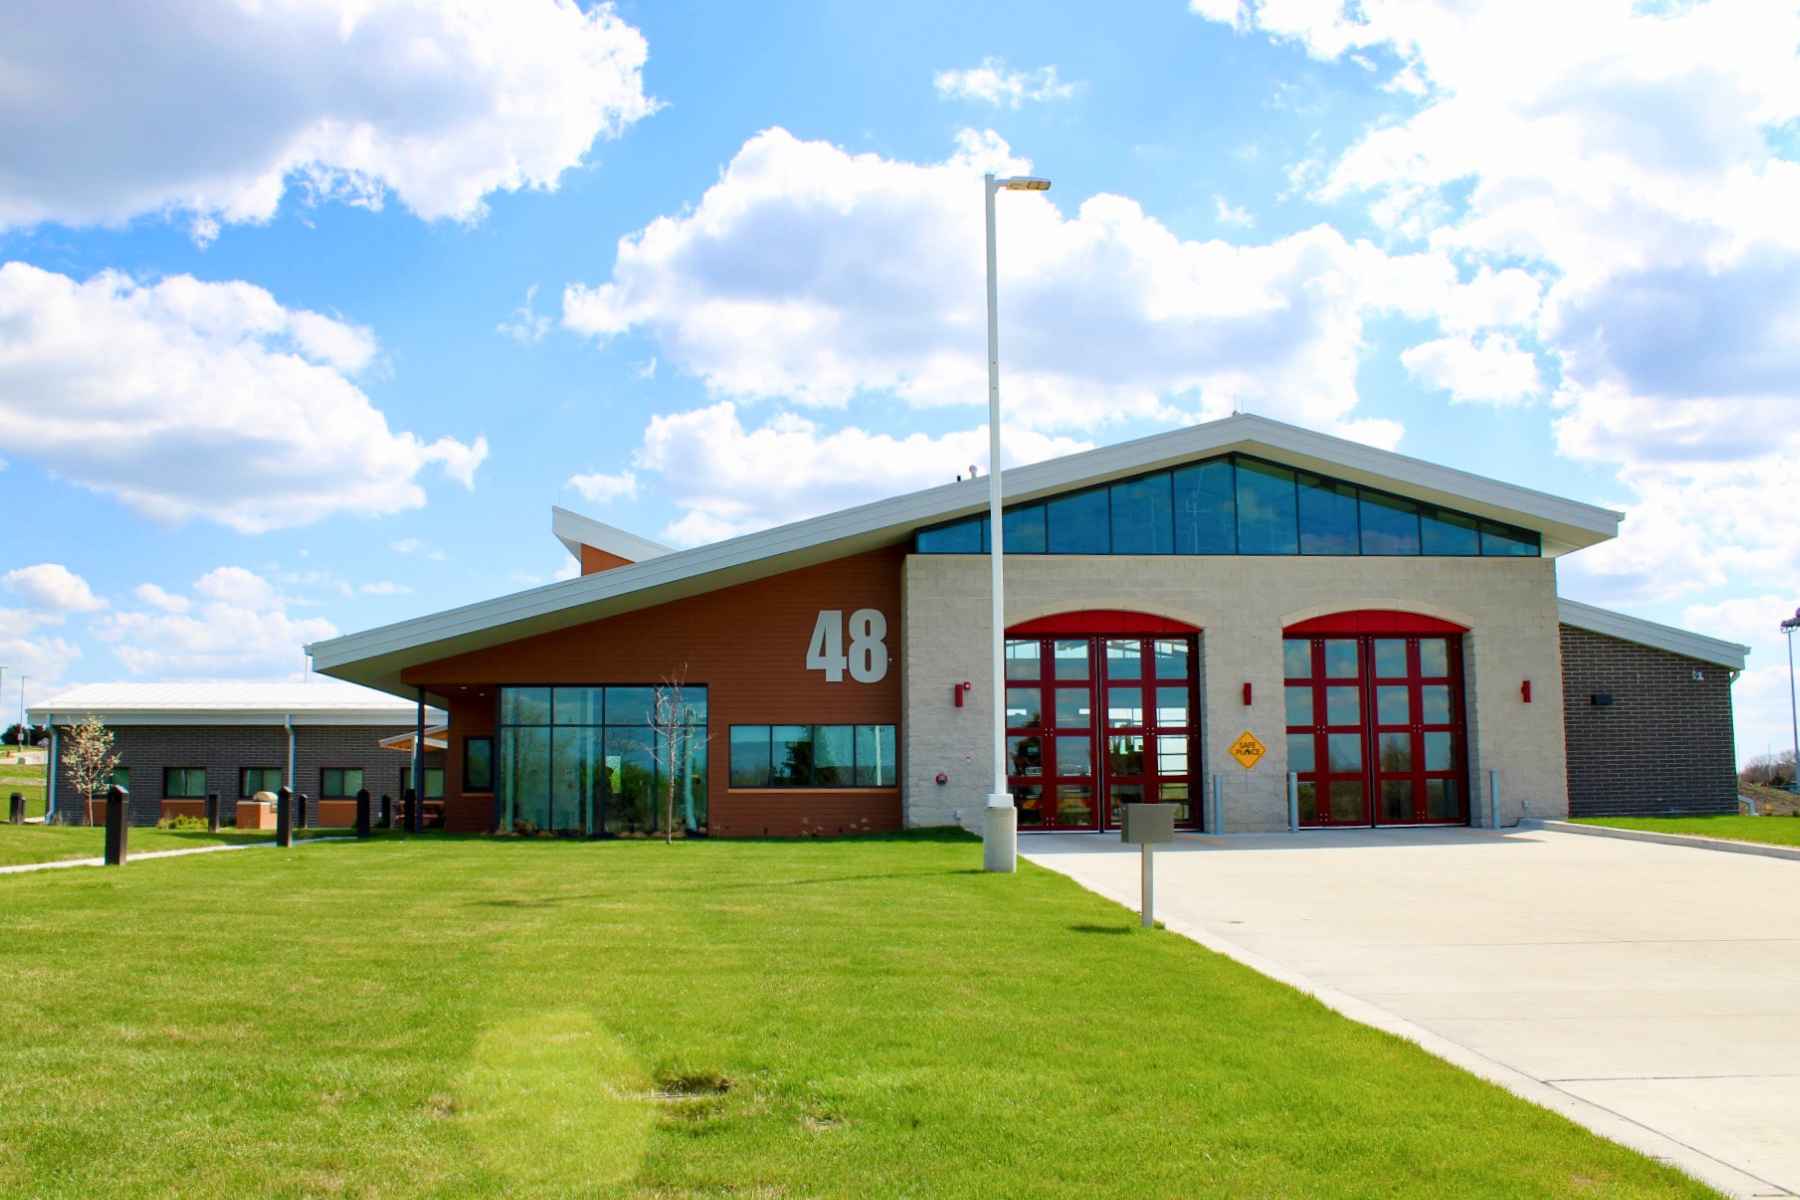 Overland Park Fire Station